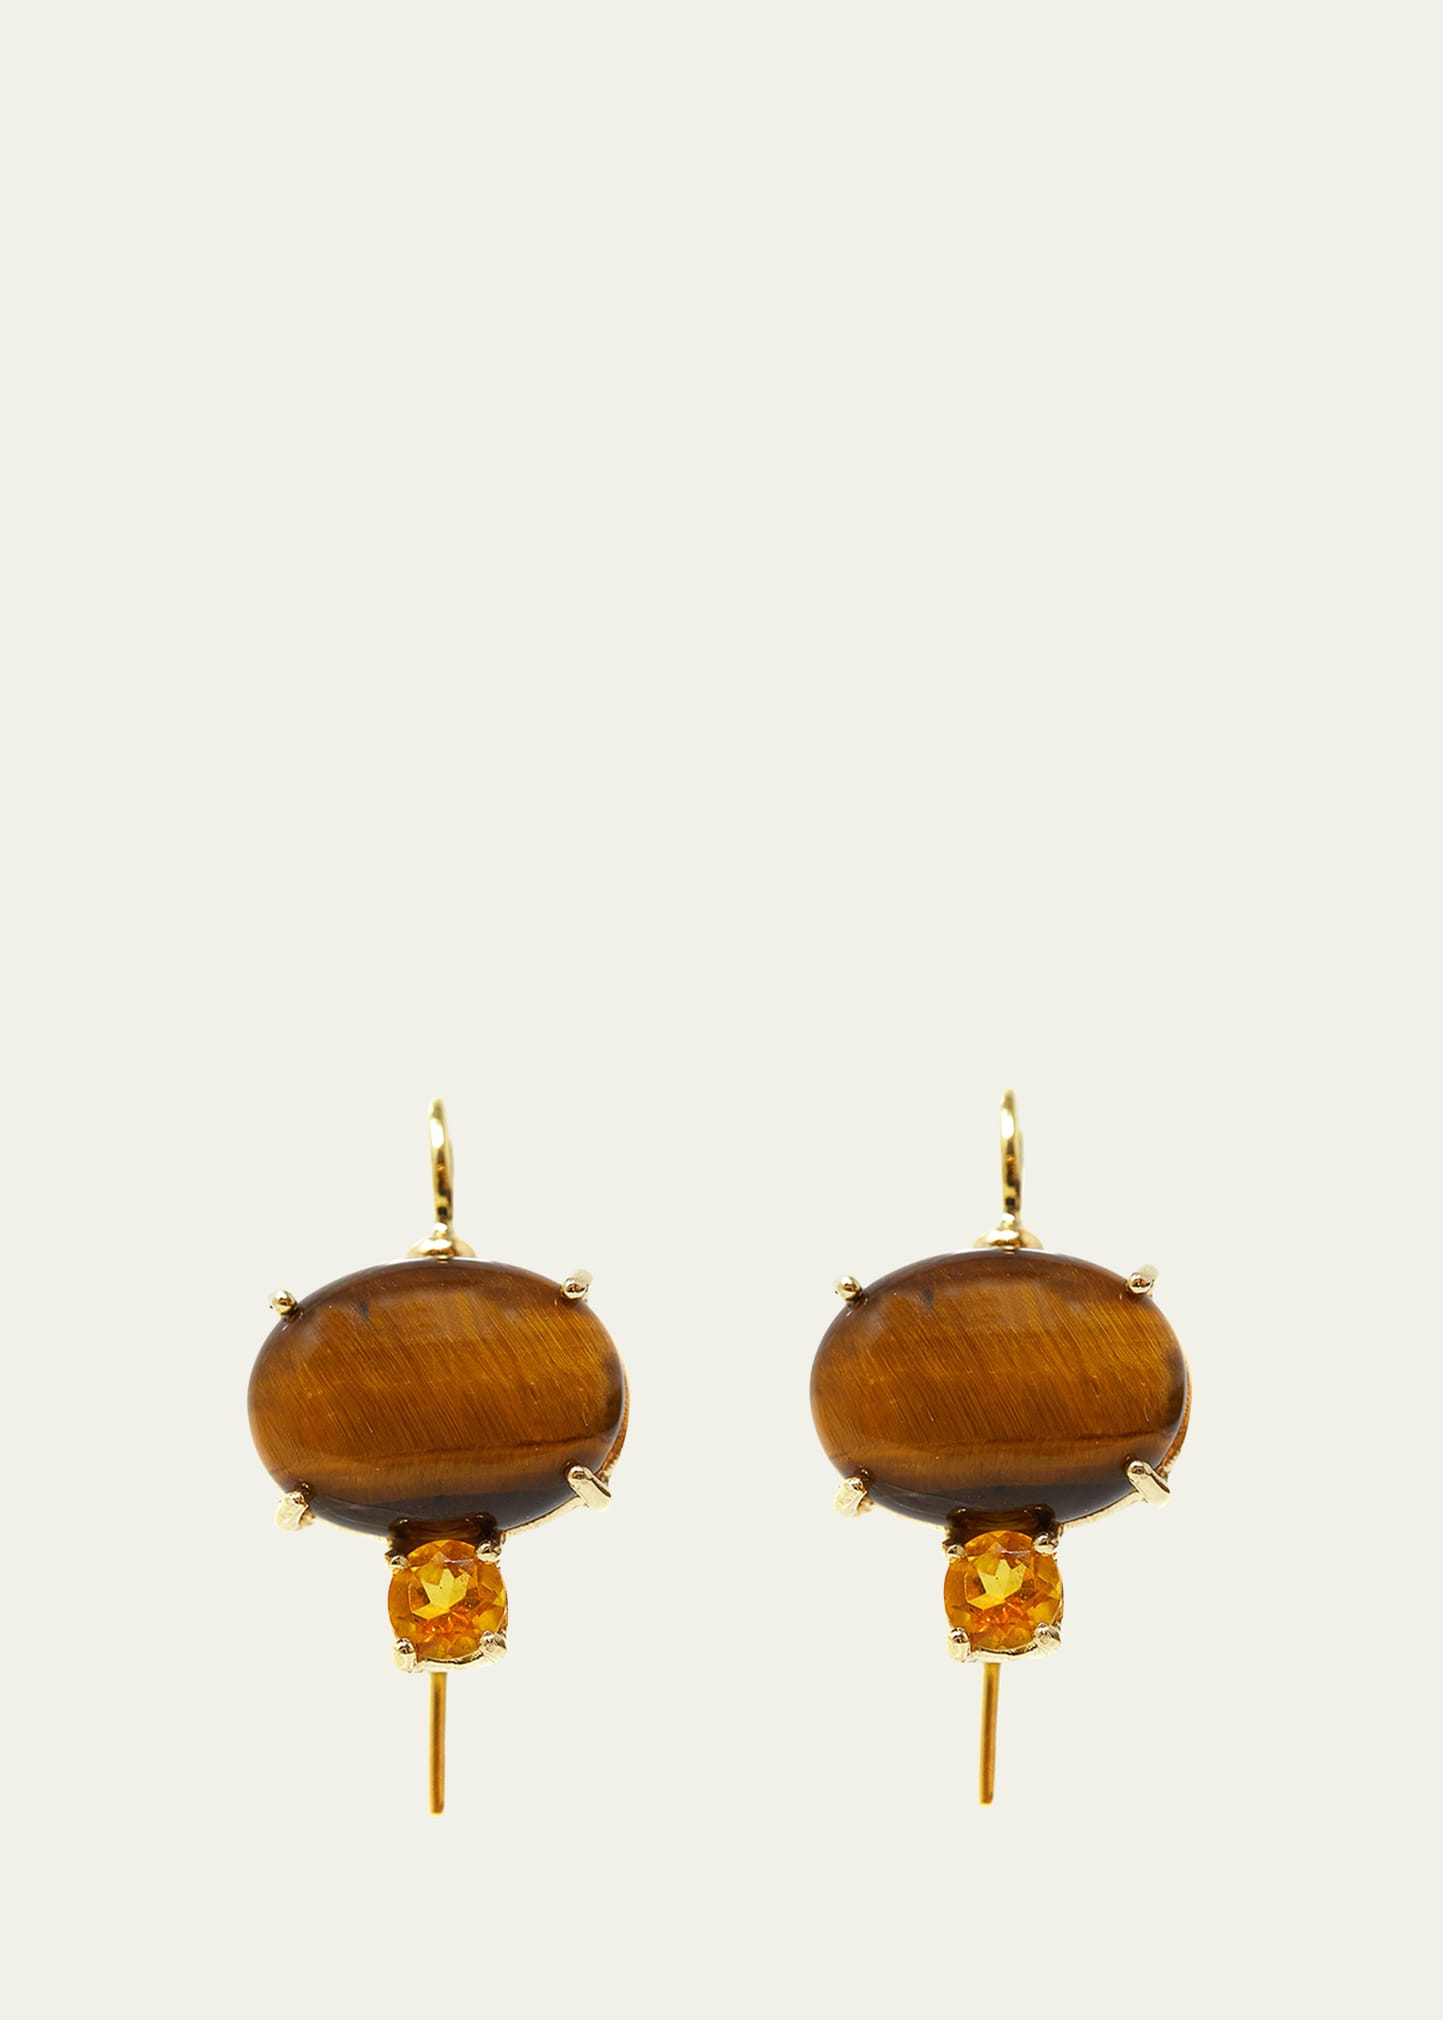 18K Yellow Gold Monachina Stone Hook Earrings with Tiger Eye and Citrine Quartz